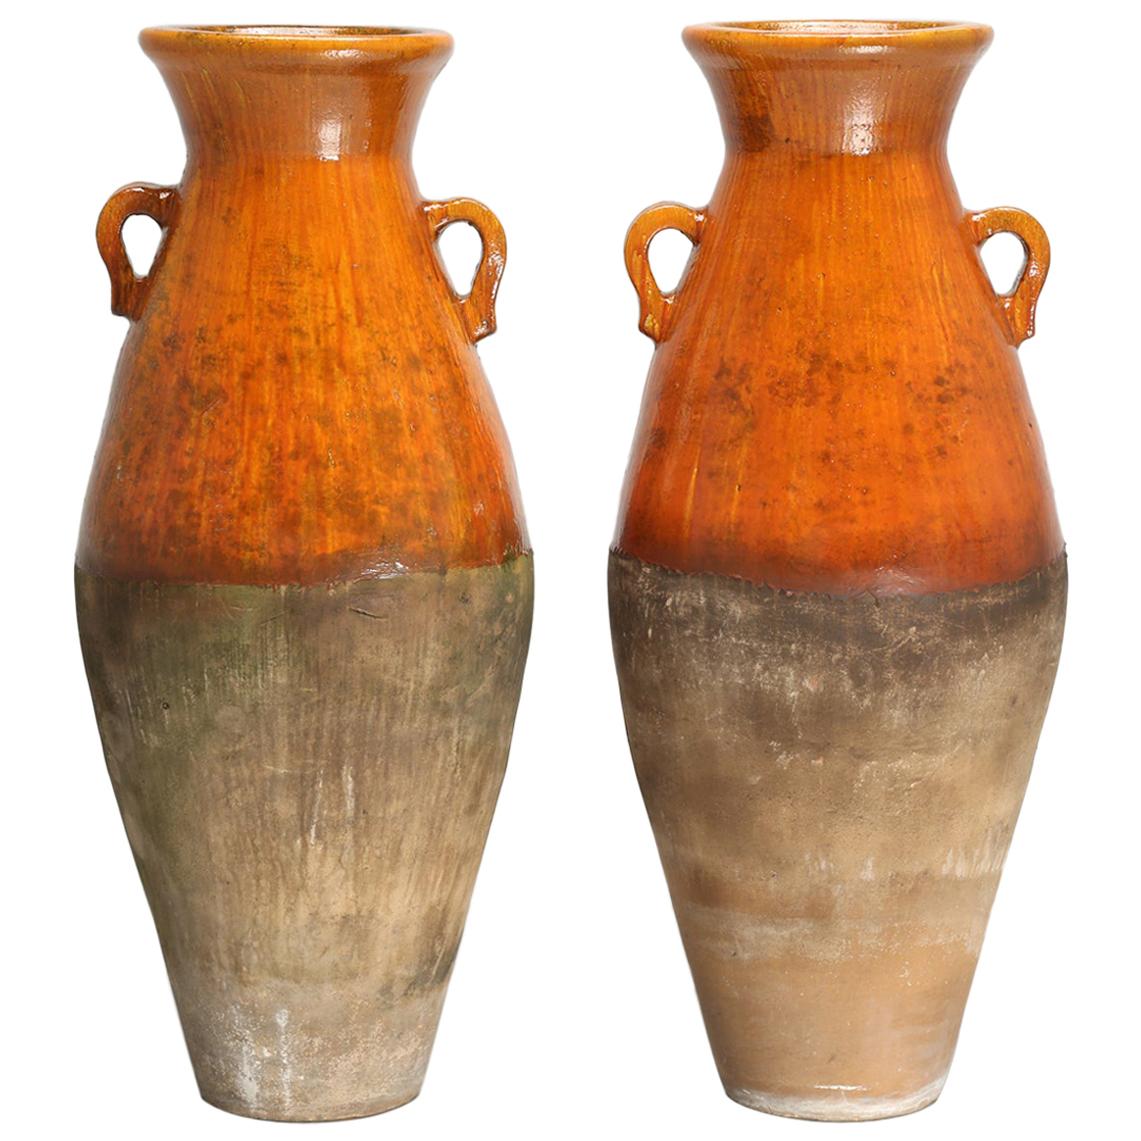 Pair of Antique Greek Olive Oil or Wine Amphora's